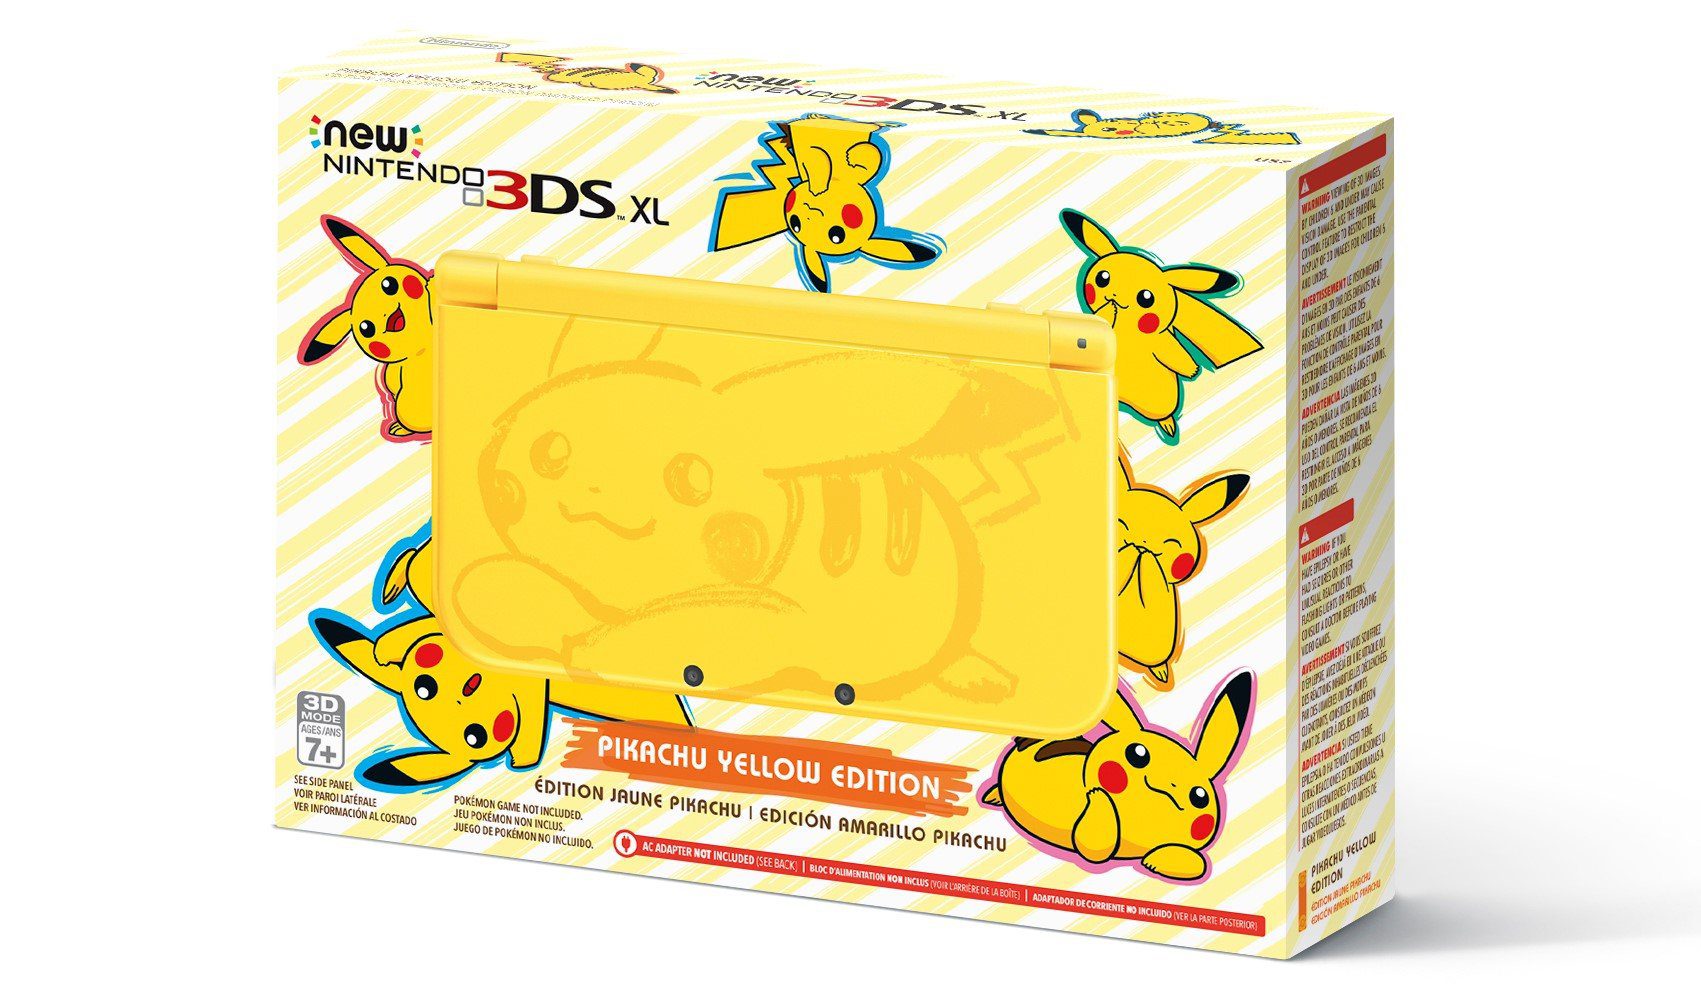 Pikachu Yellow Edition New Nintendo 3DS XL Hitting North America Feb 24th